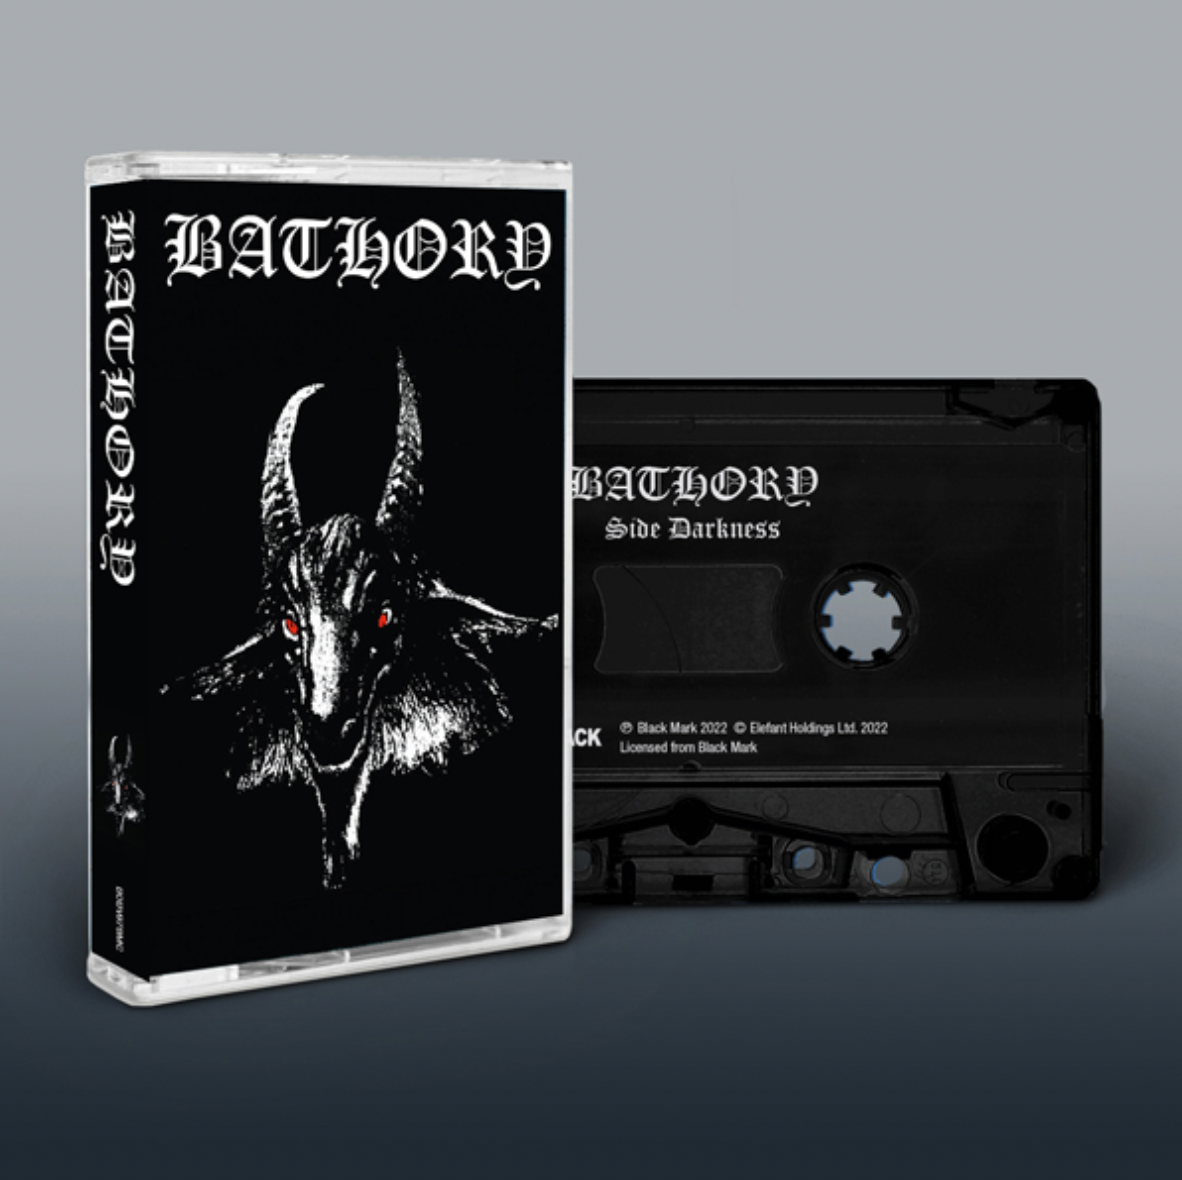 Bathory 'Bathory' Cassette